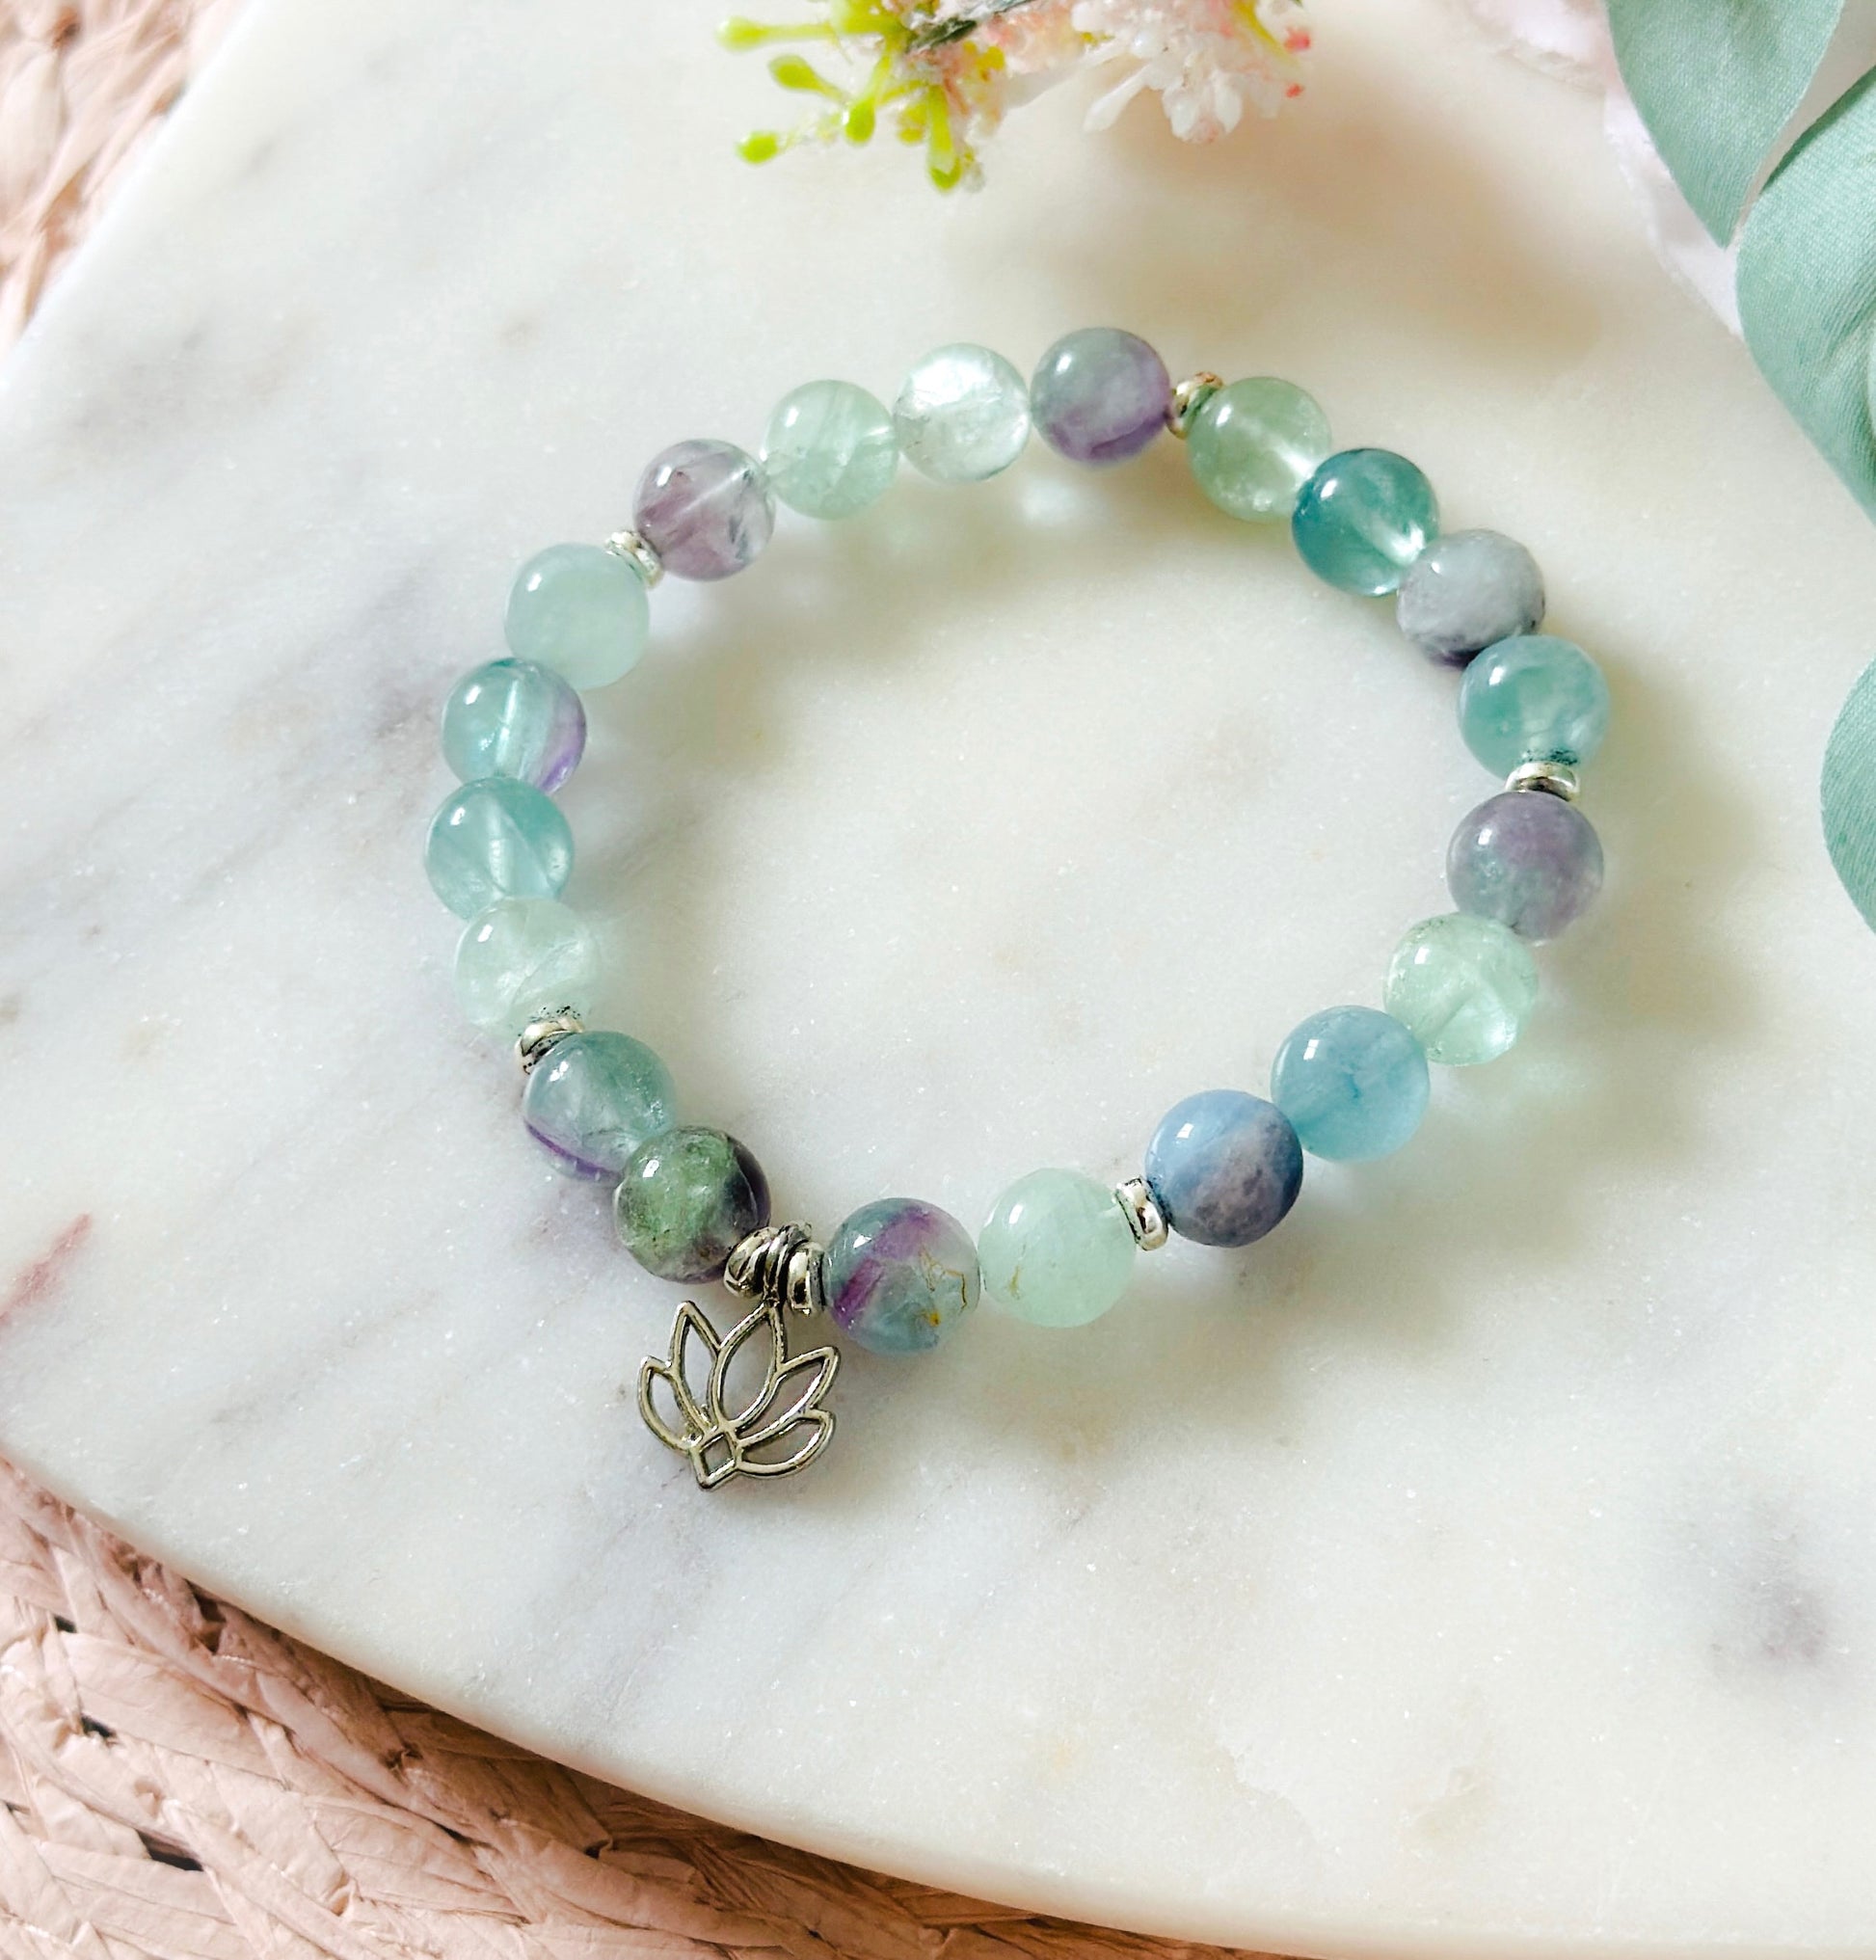 Fluorite gemstone bracelet with a lotus charm